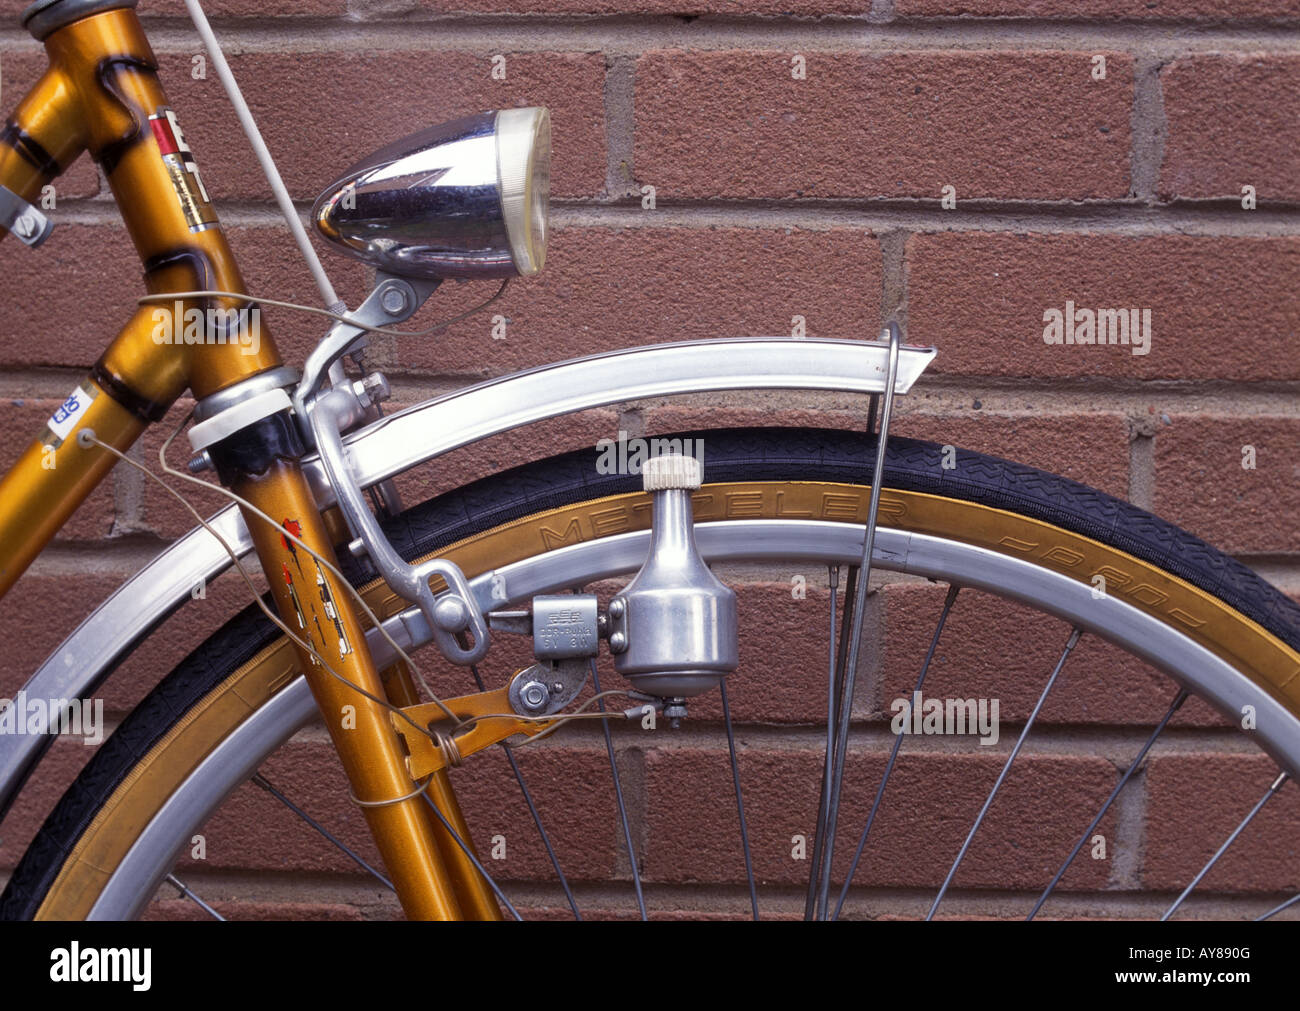 Bicycle dynamo Stock Photo